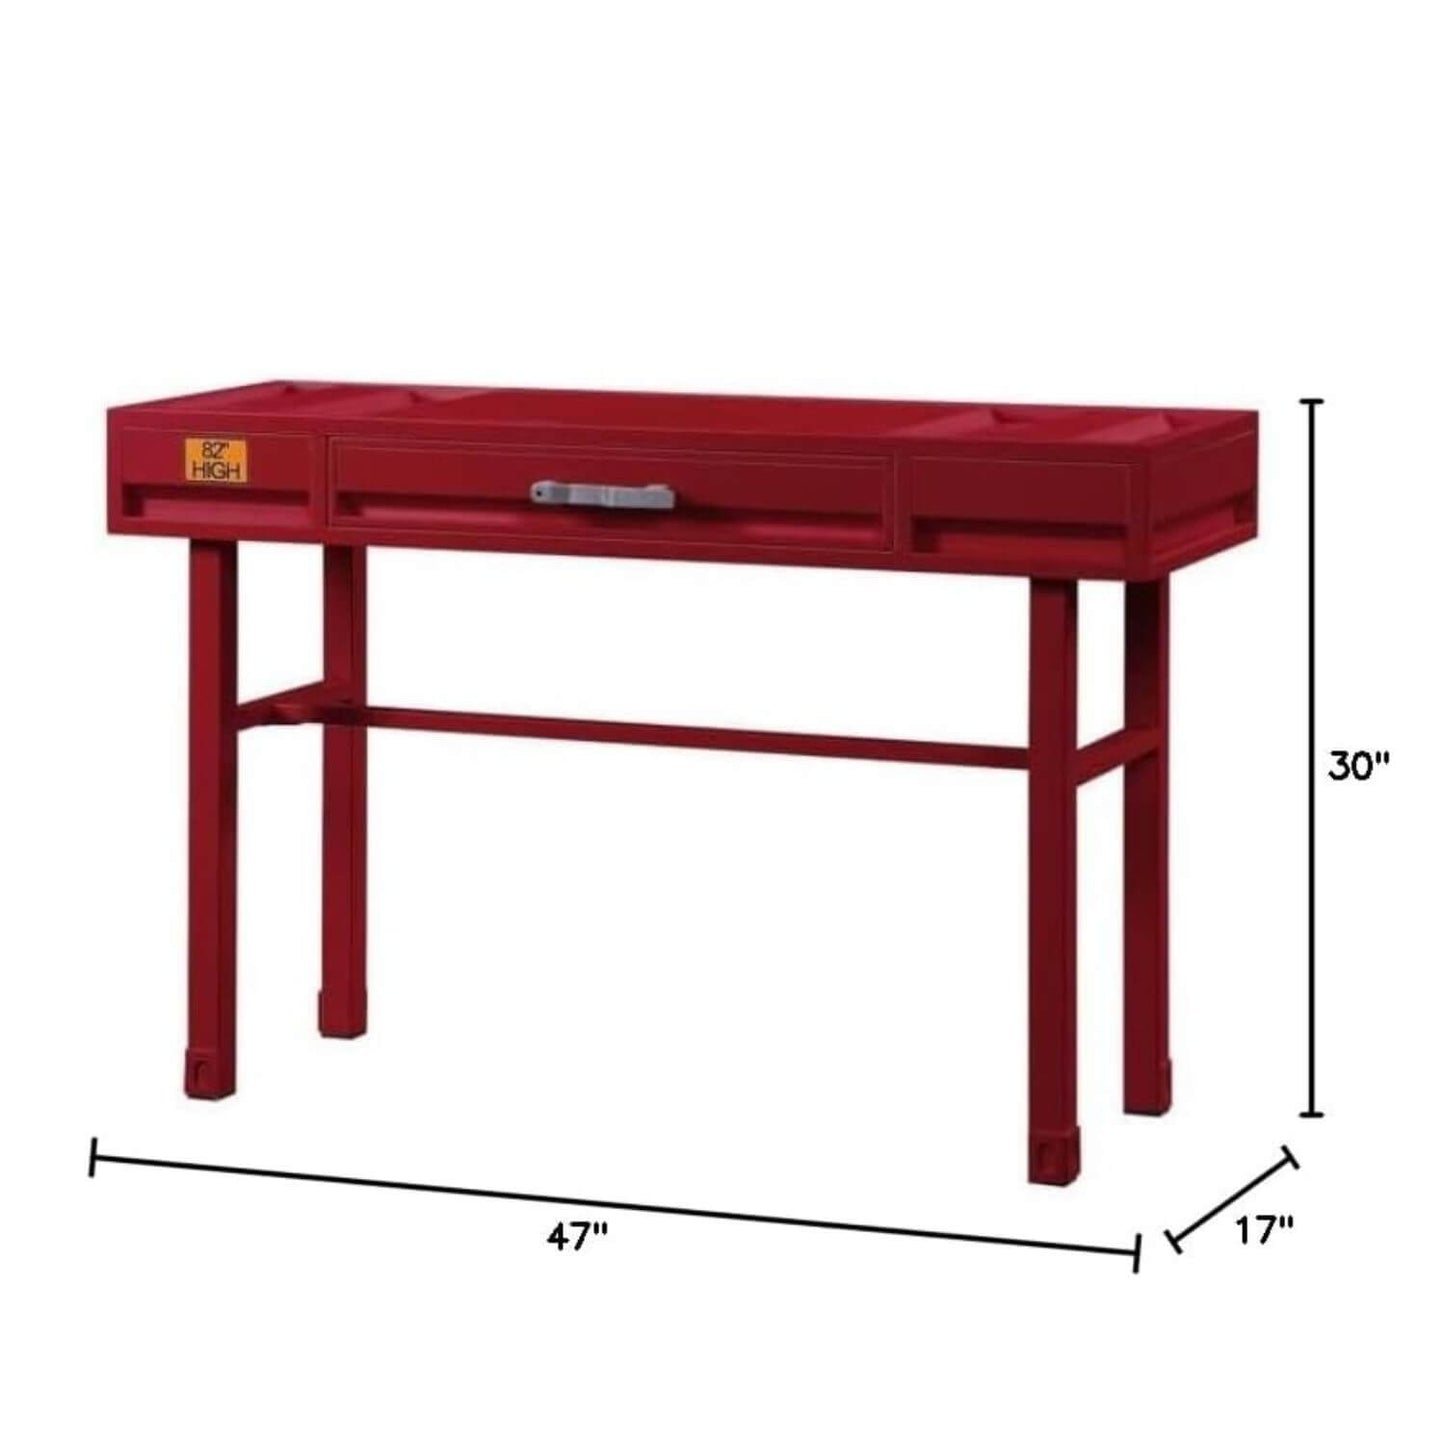 ACME Cargo Vanity Desk in Red - Dimensions